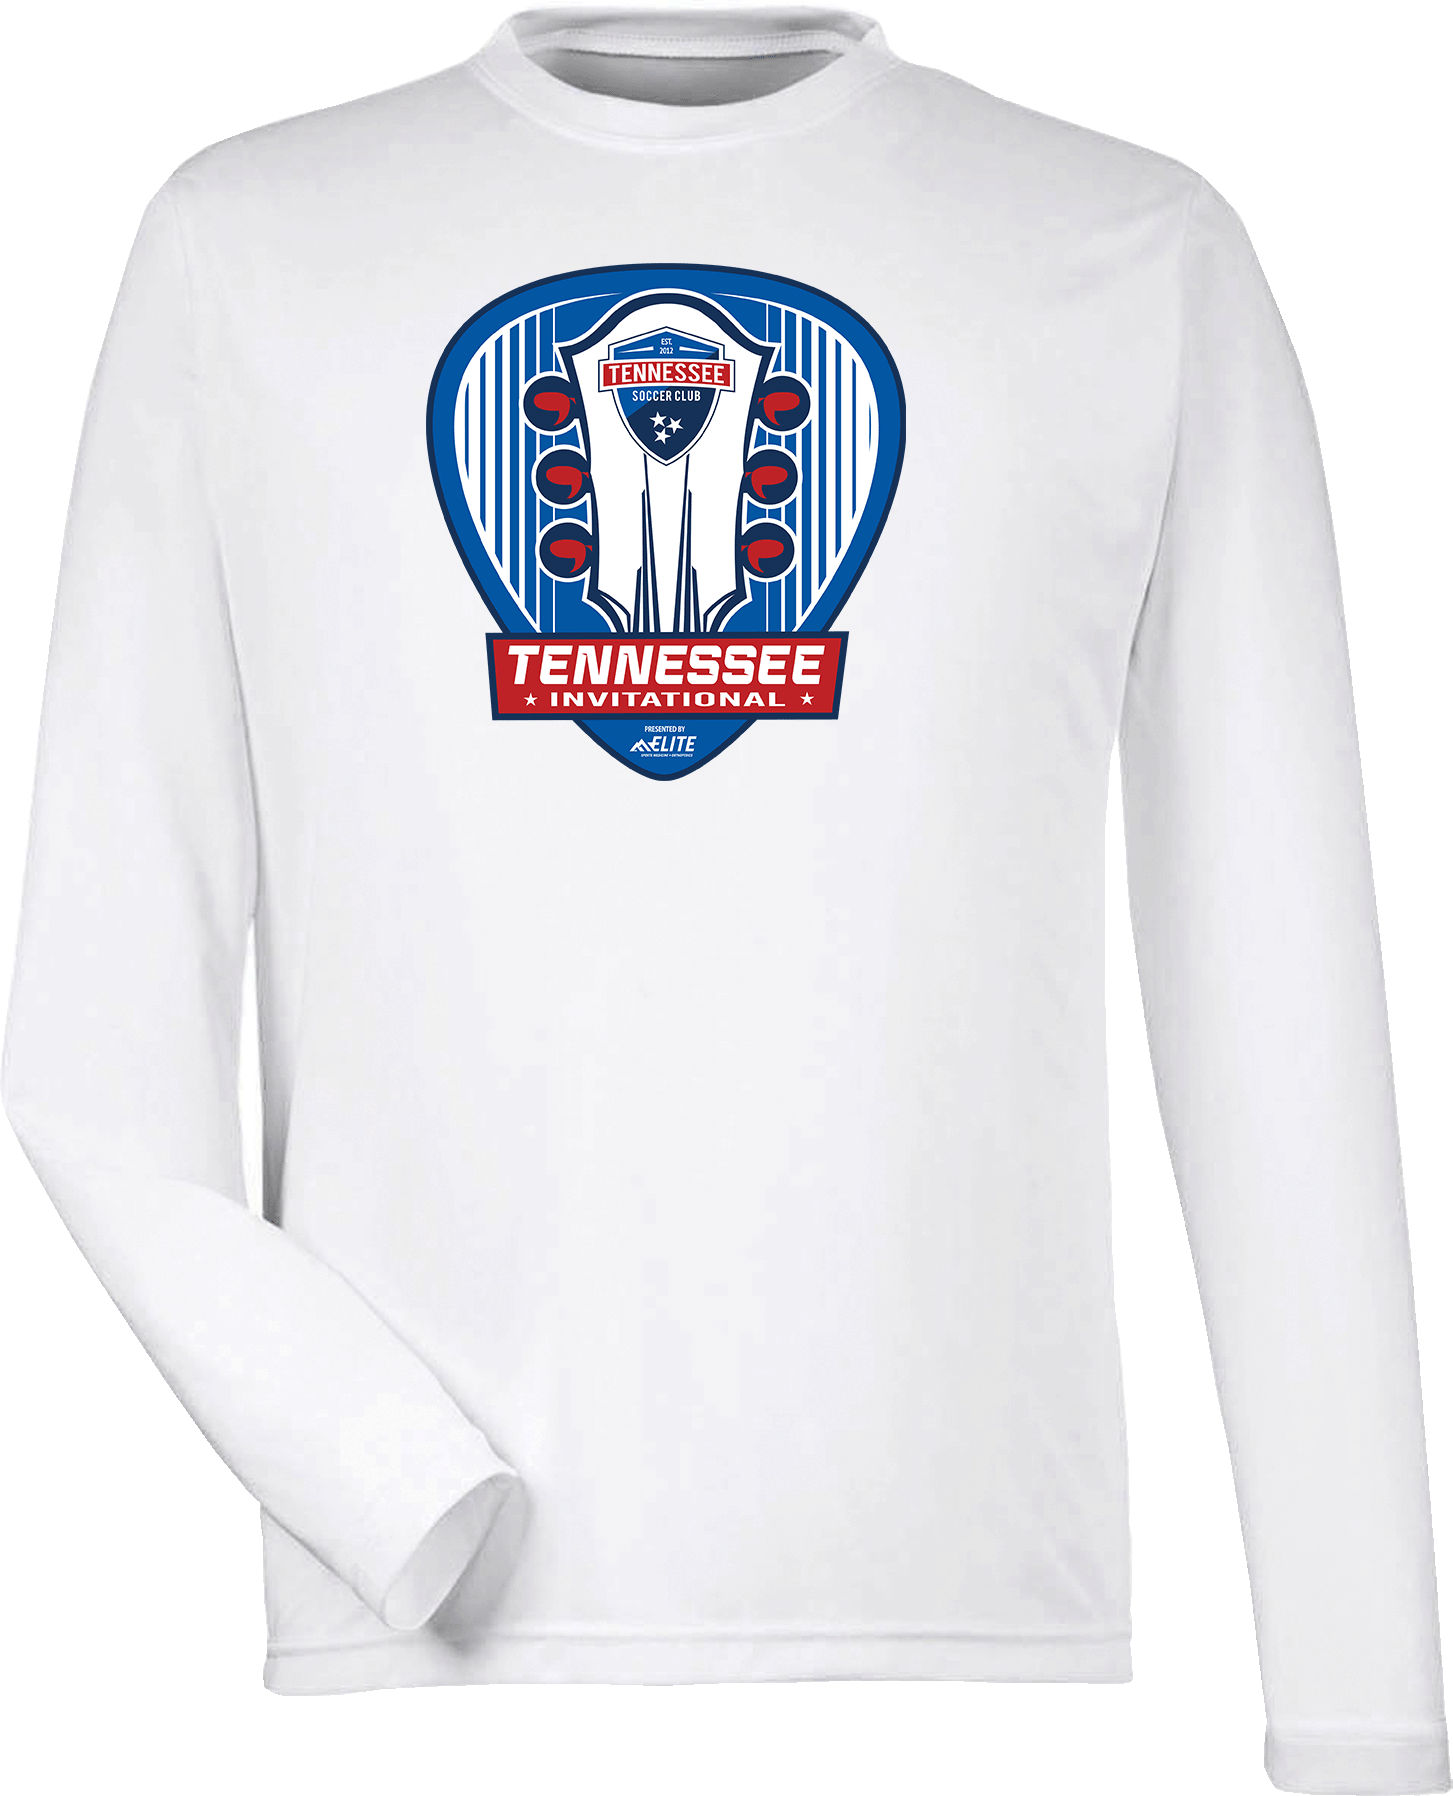 Performance Shirts - 2024 Tennessee Invitational